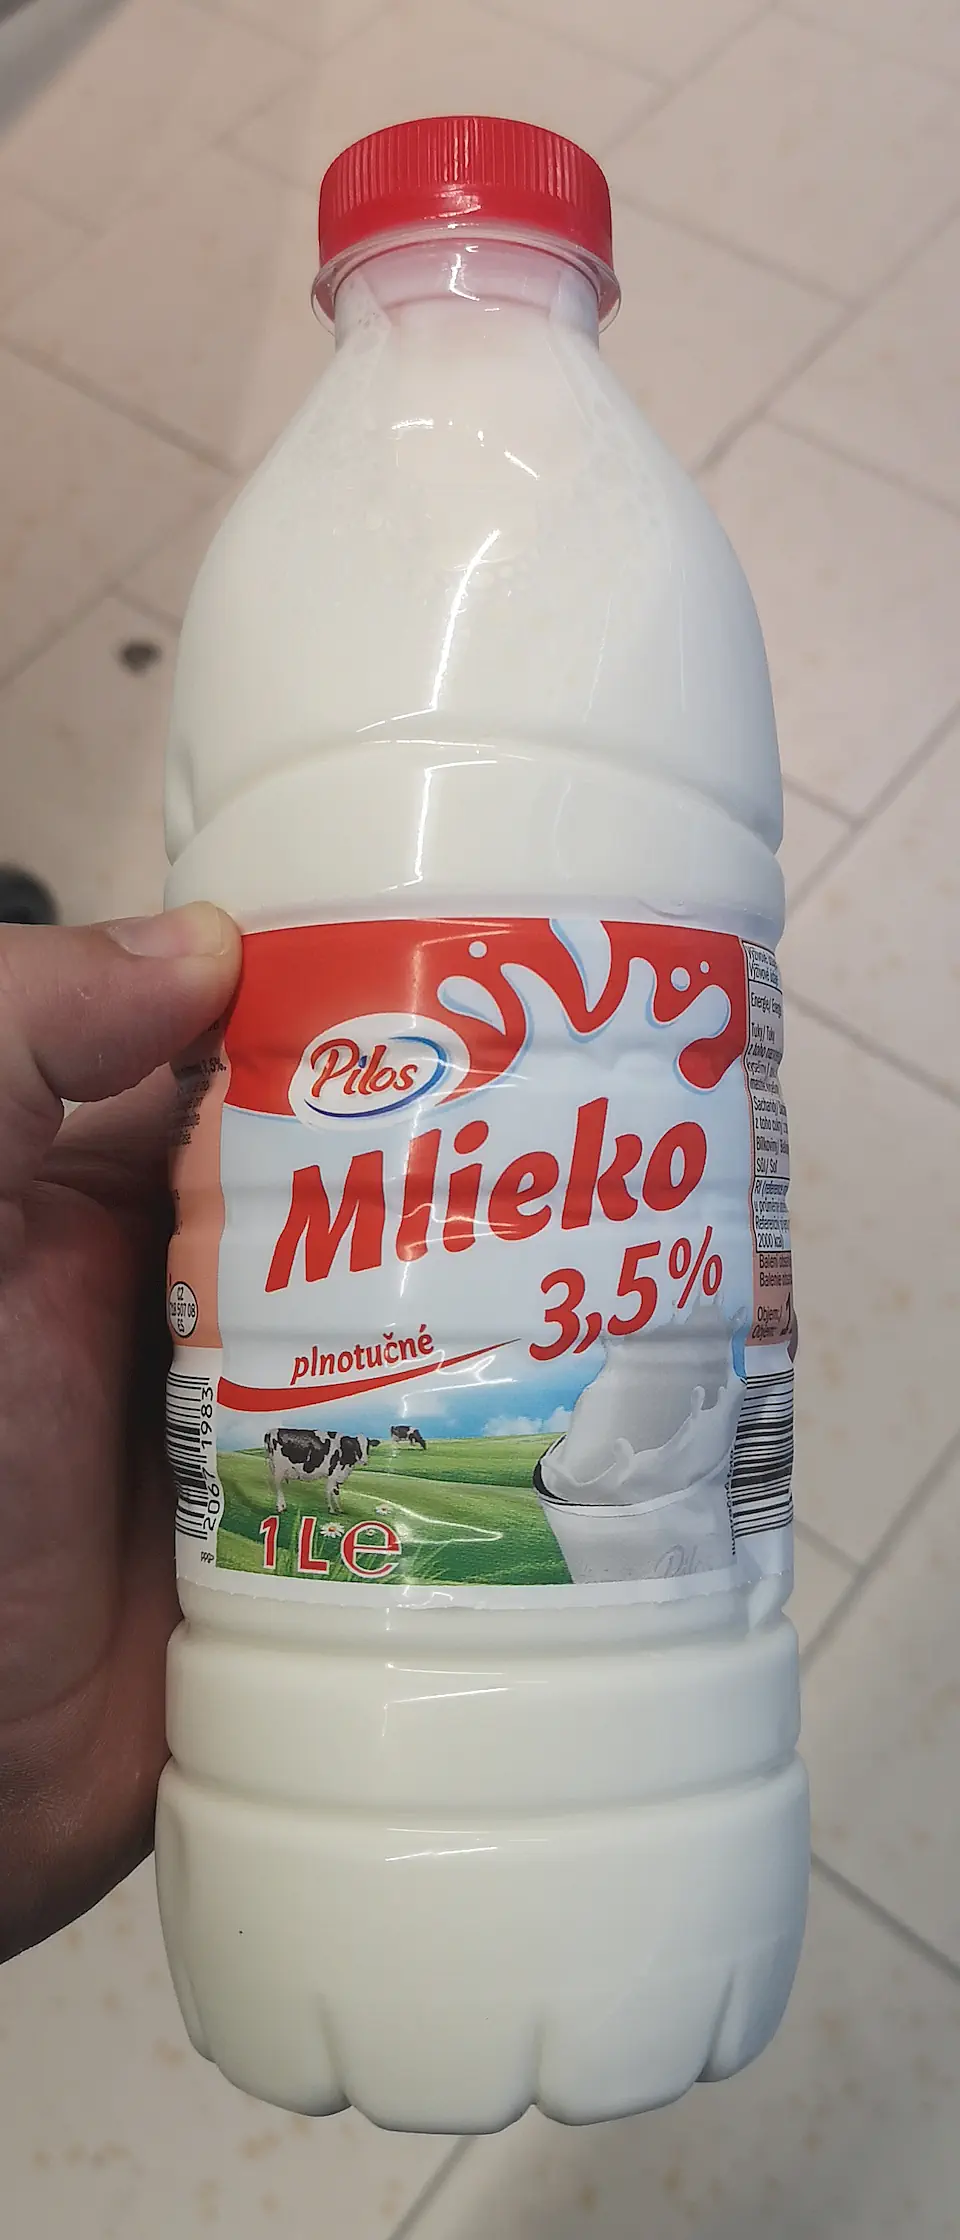 Pilos Mléko plnotučné